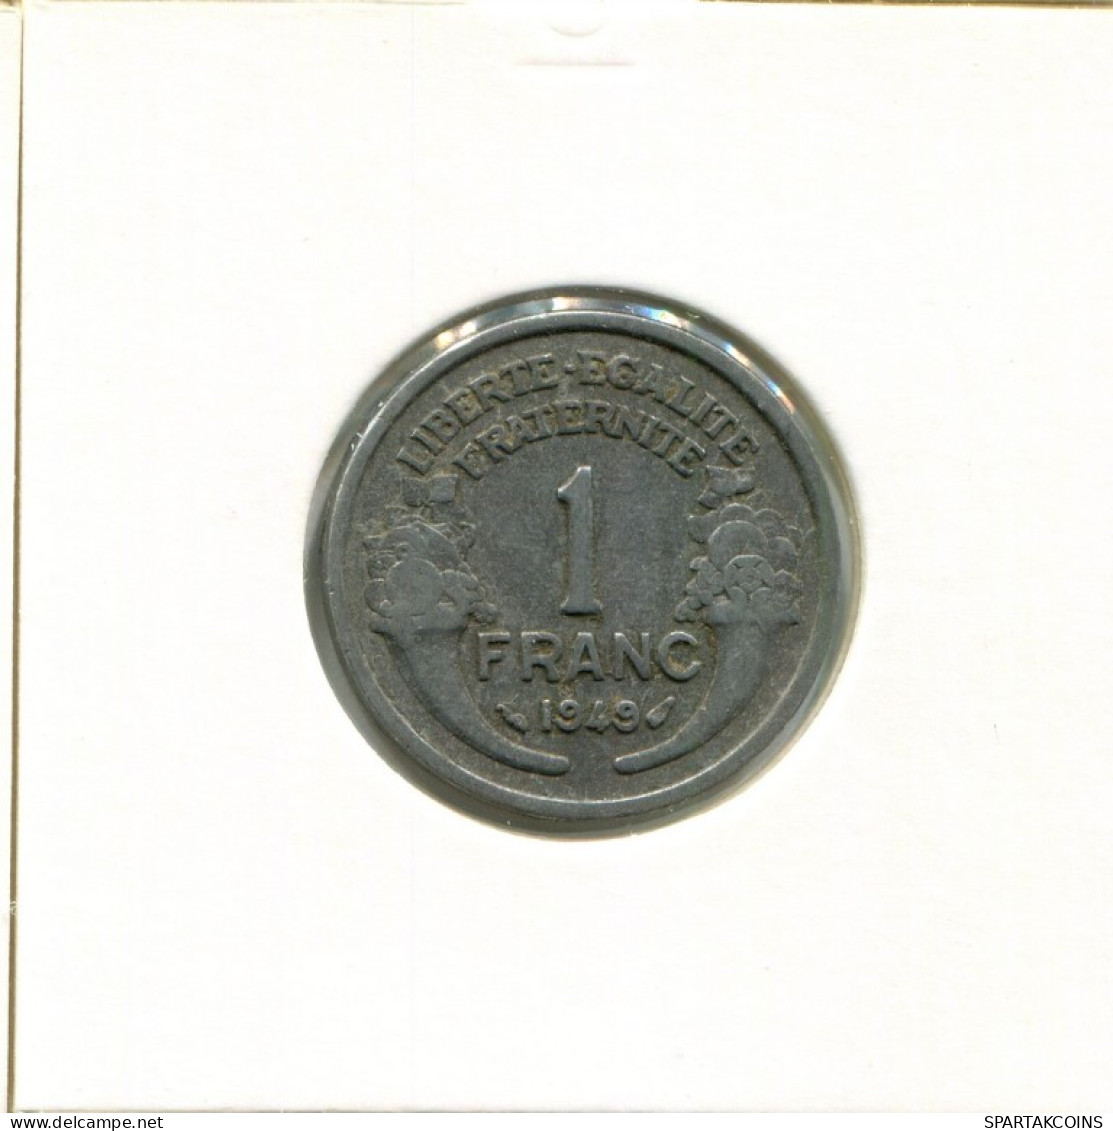 1 FRANC 1949 FRANKREICH FRANCE Französisch Münze #AK599.D.A - 1 Franc